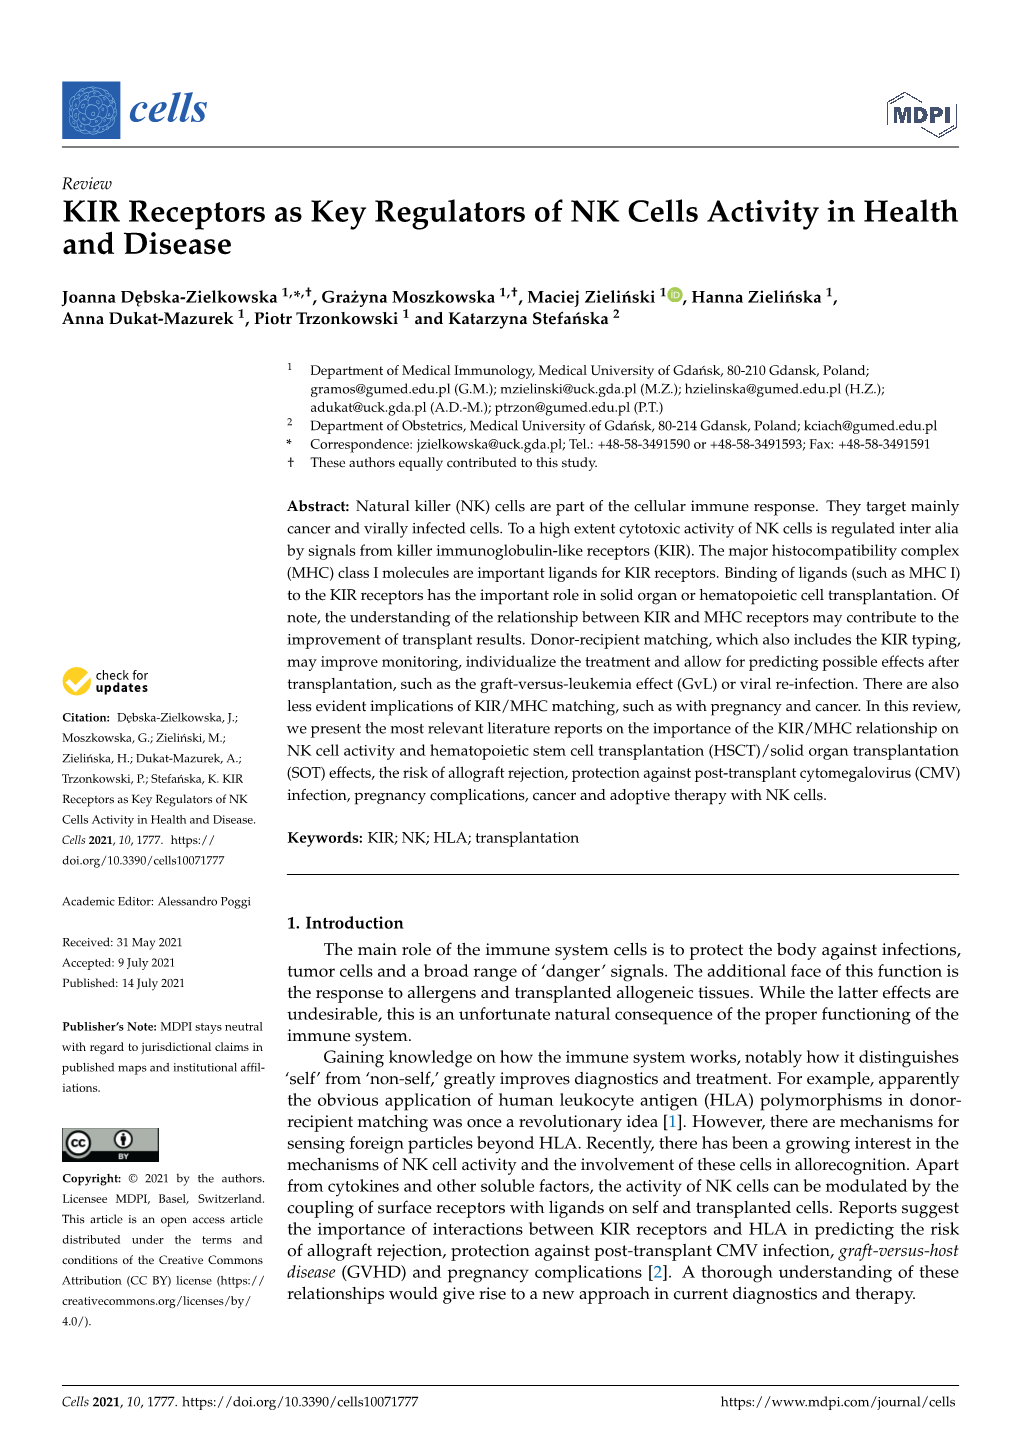 KIR Receptors As Key Regulators of NK Cells Activity in Health and Disease